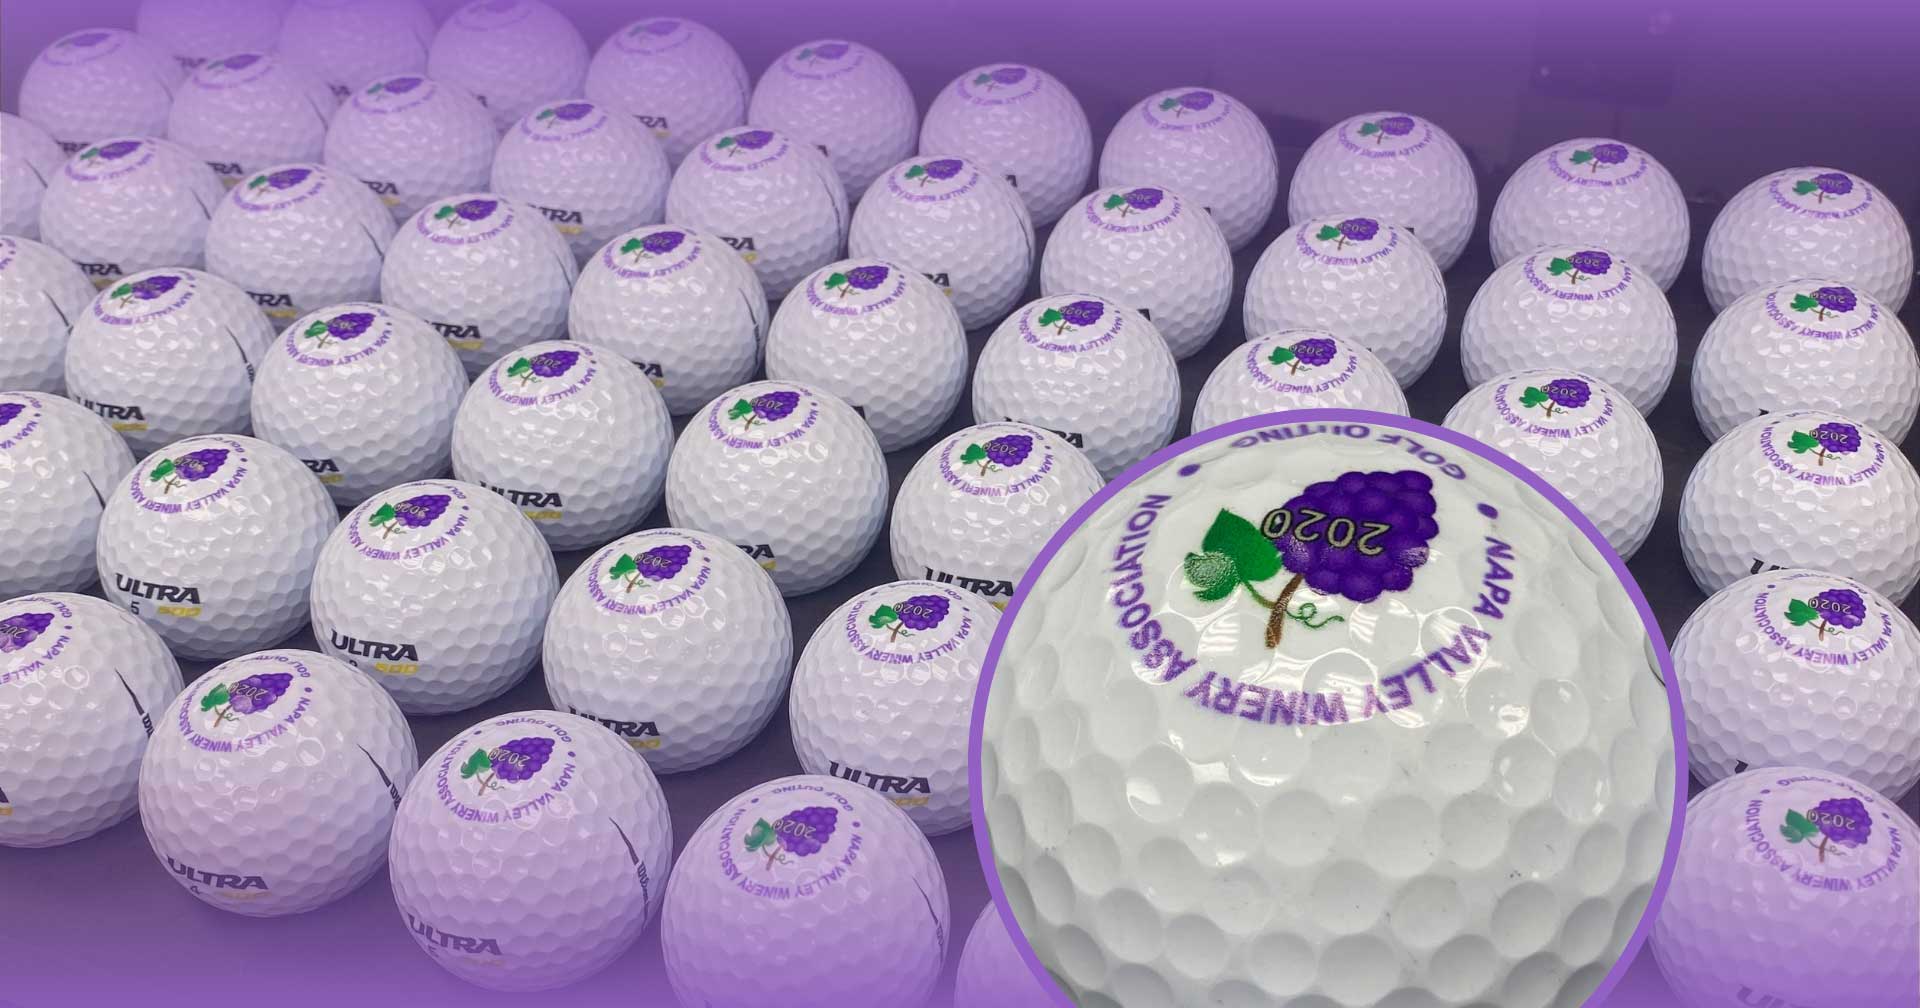 How to UV Print on Golf Balls